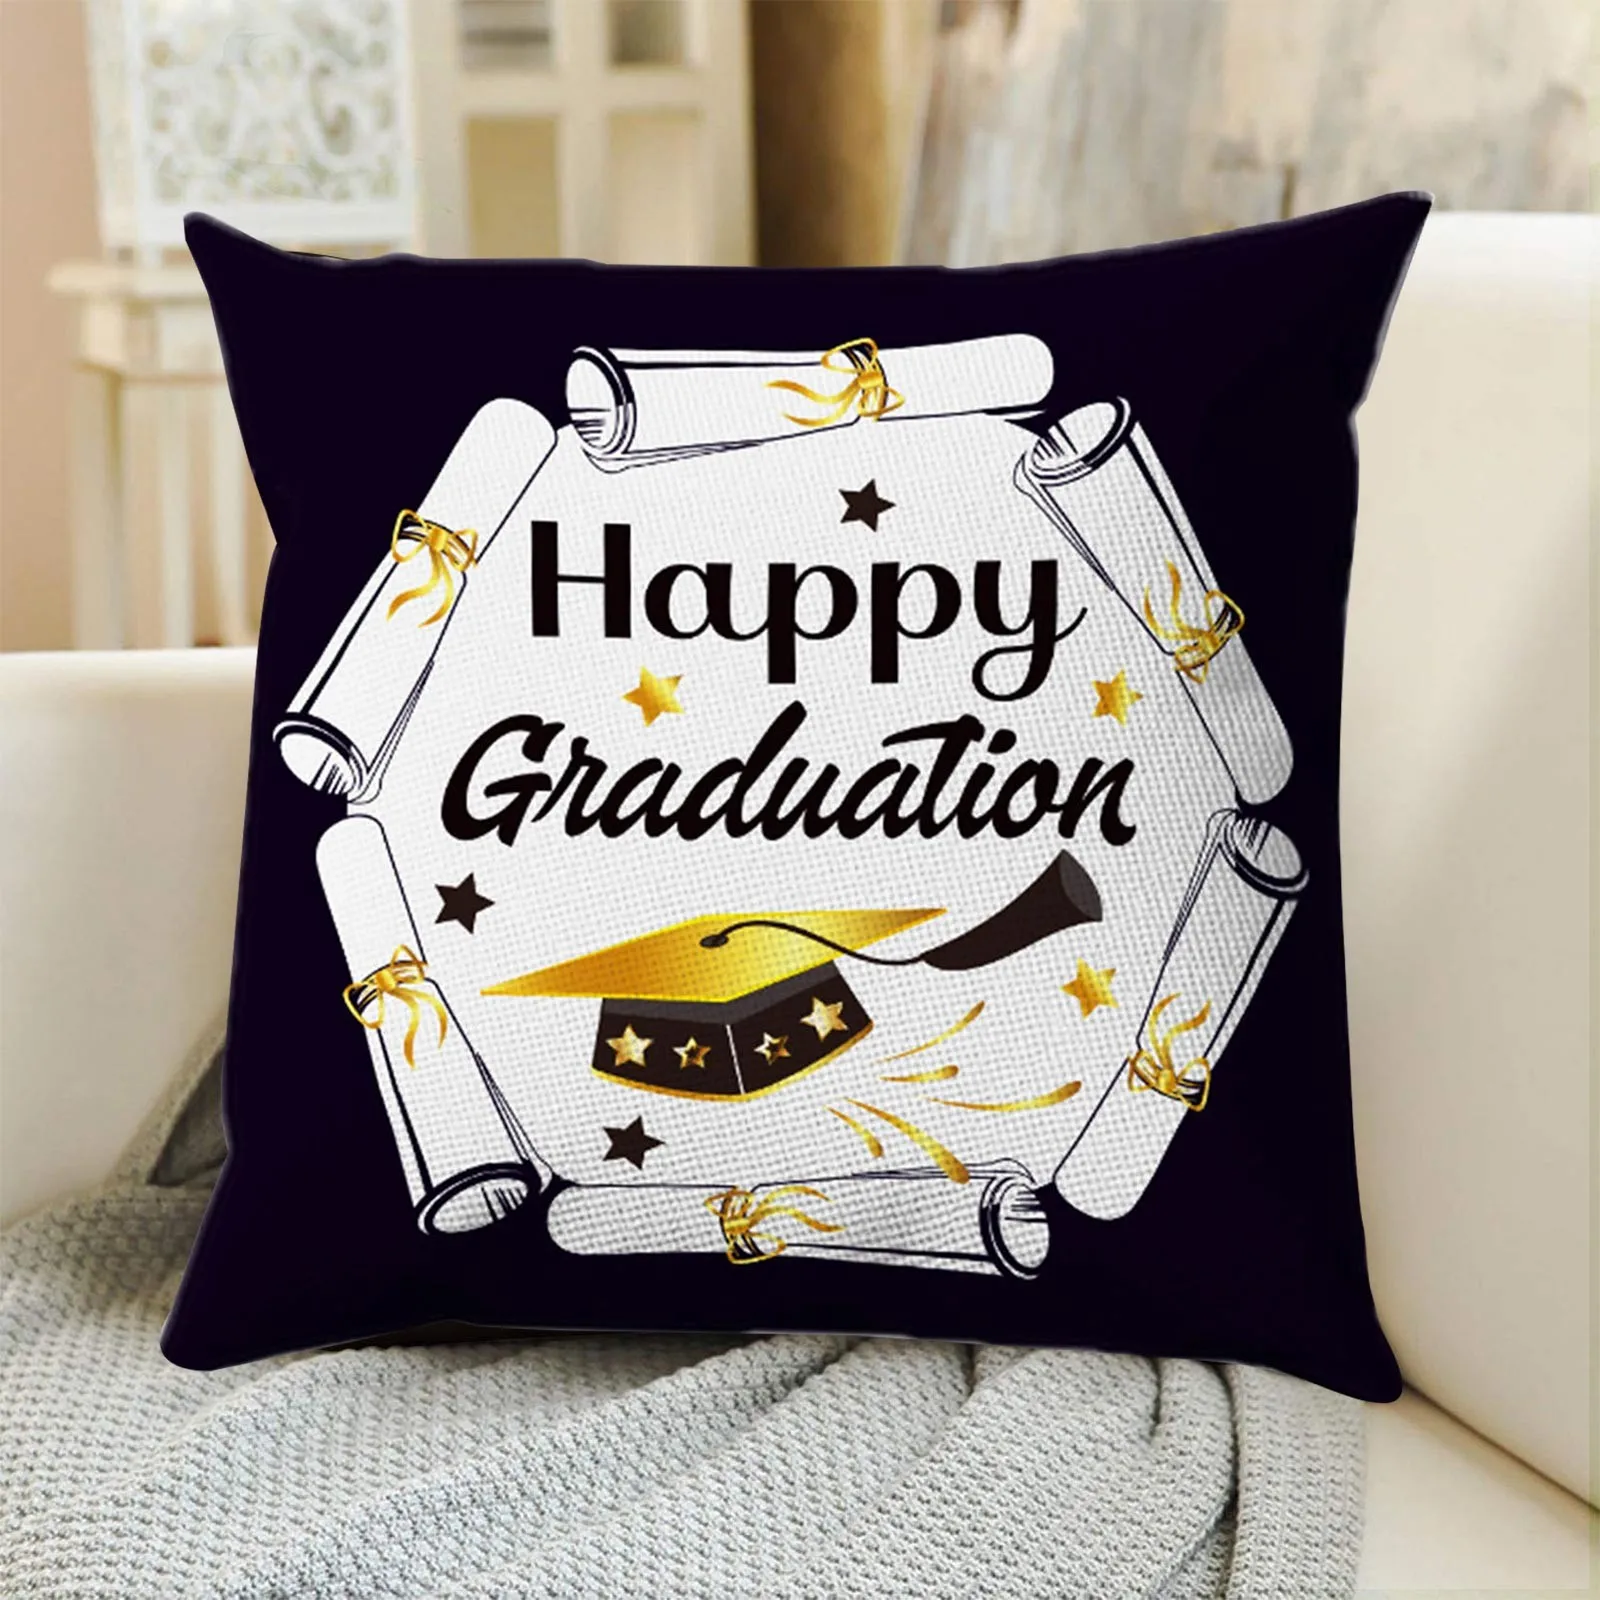 

Graduation Season Throw Pillow Covers 17.71x17.71 Inches Decorative Cushion Pillow For Couch Sofa Chair Durable Room Pillows